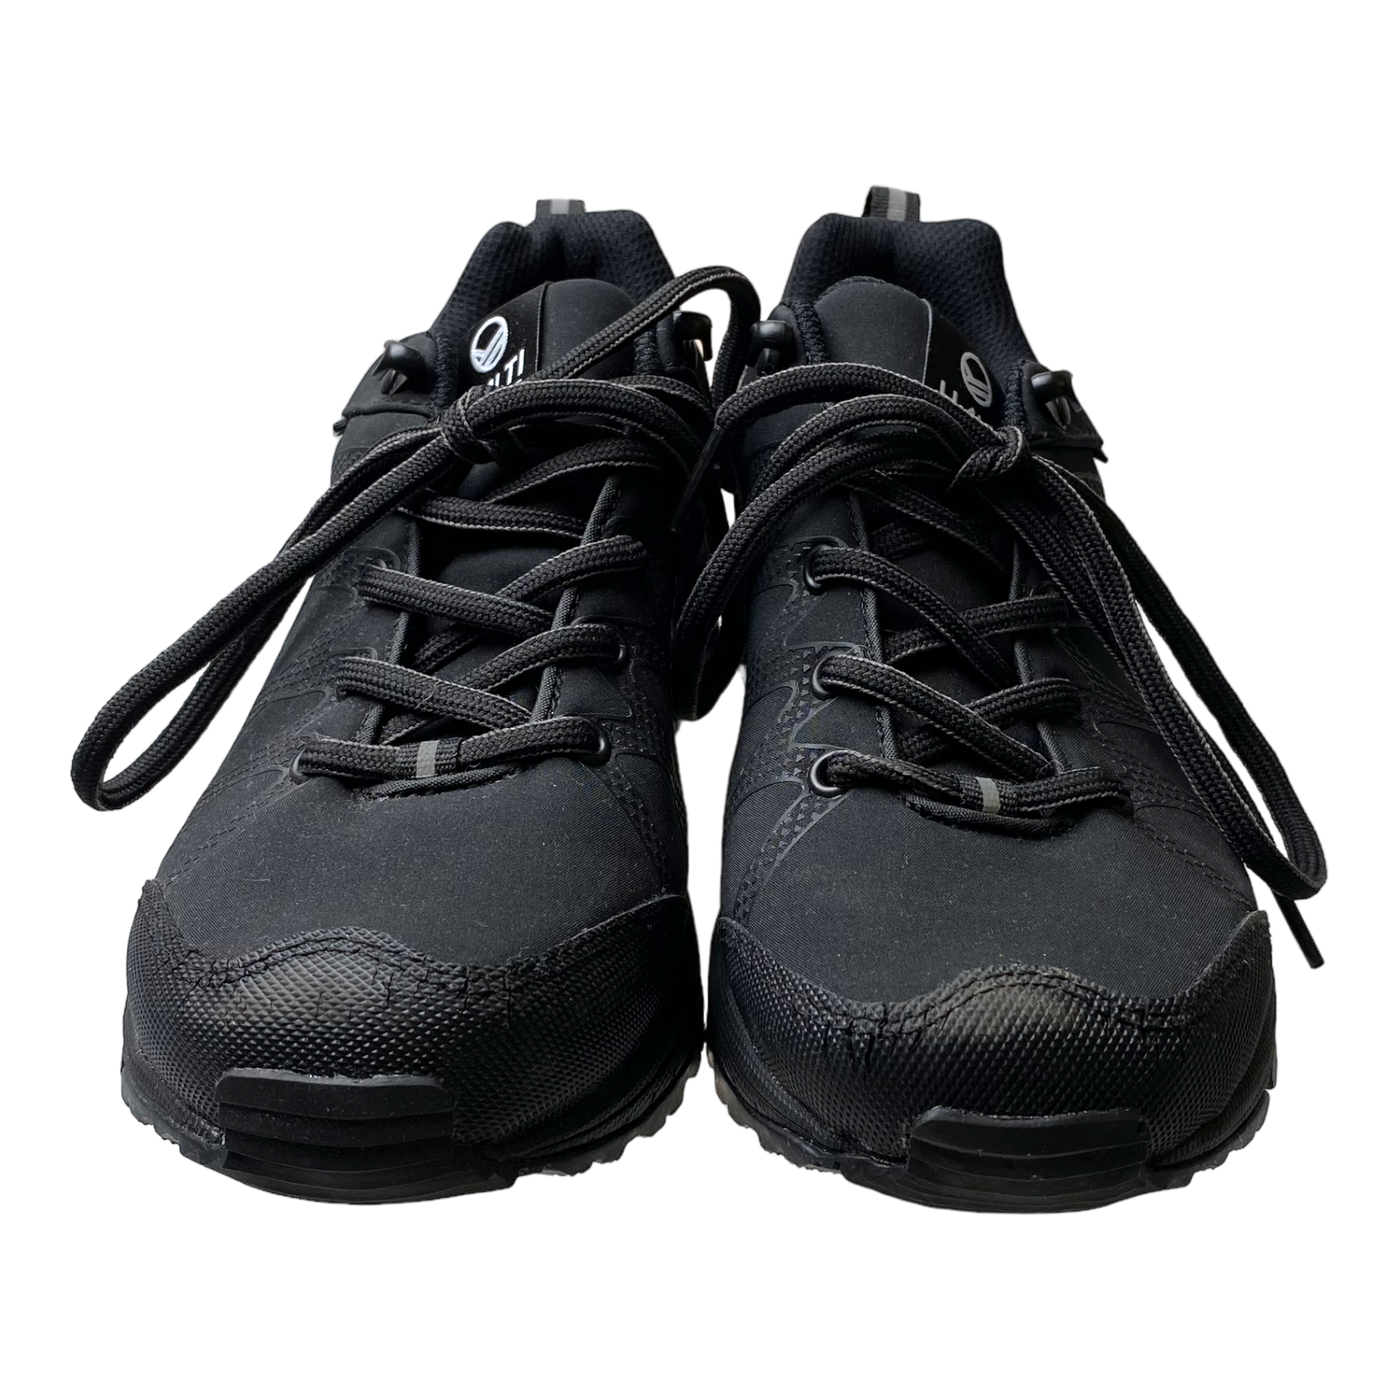 Halti drymaxx shoes, black | 36